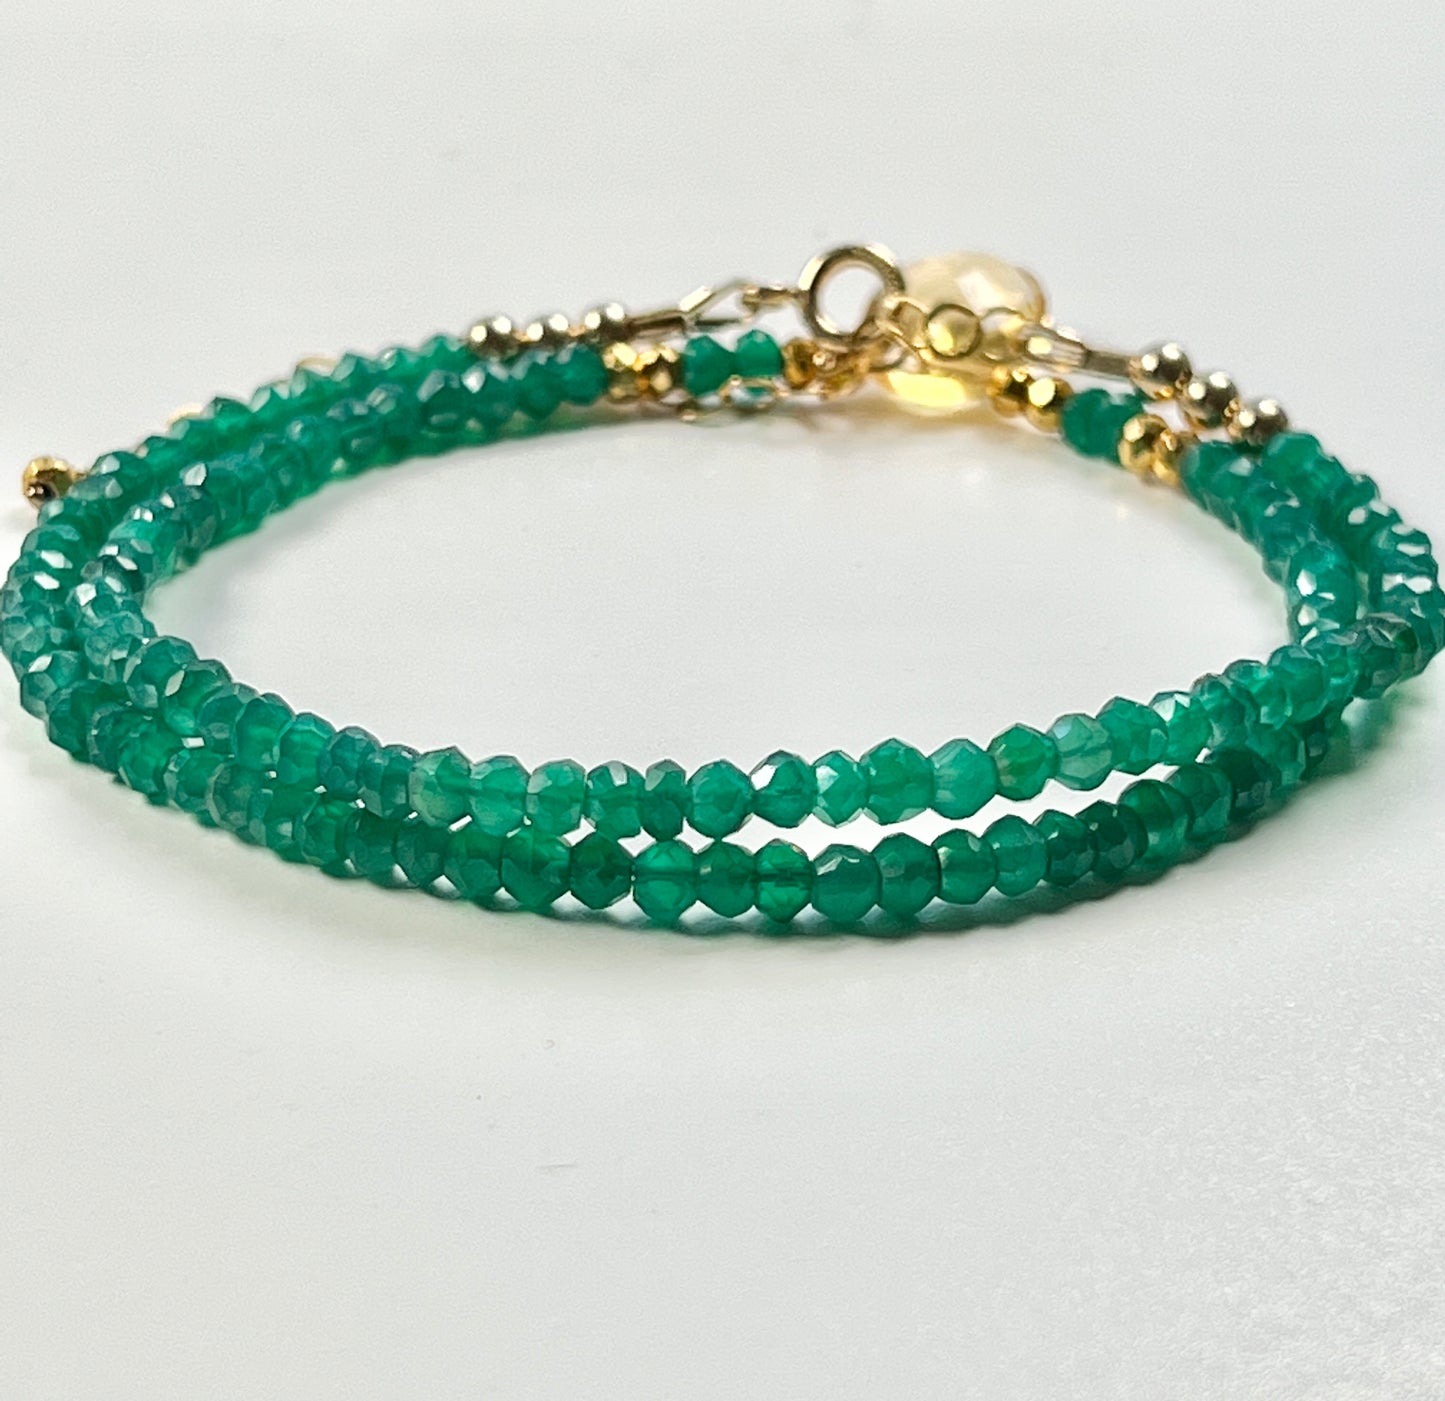 Beaded green onyx citrine necklace - Amaria Studio